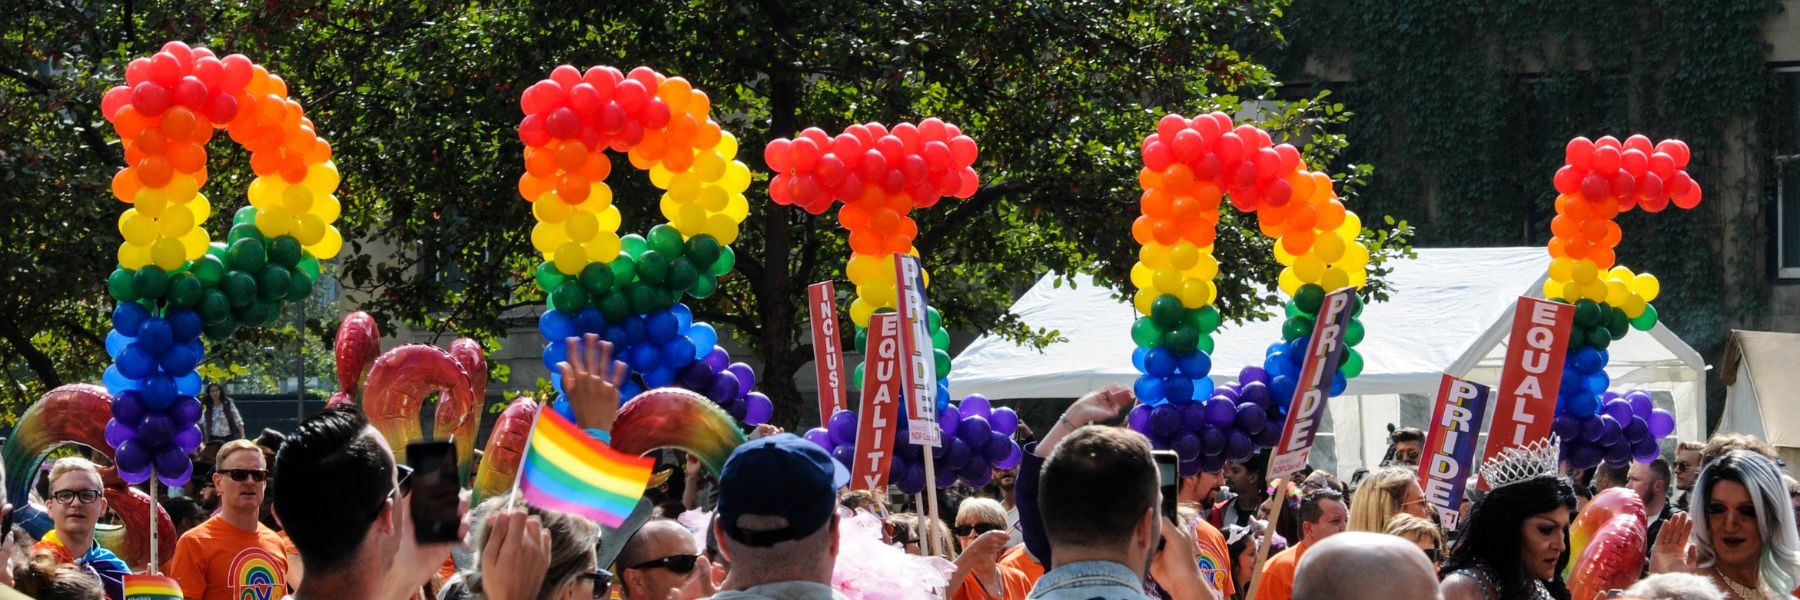 PrideFest celebrates St. Louis' vibrant LGBTQIA+ community.